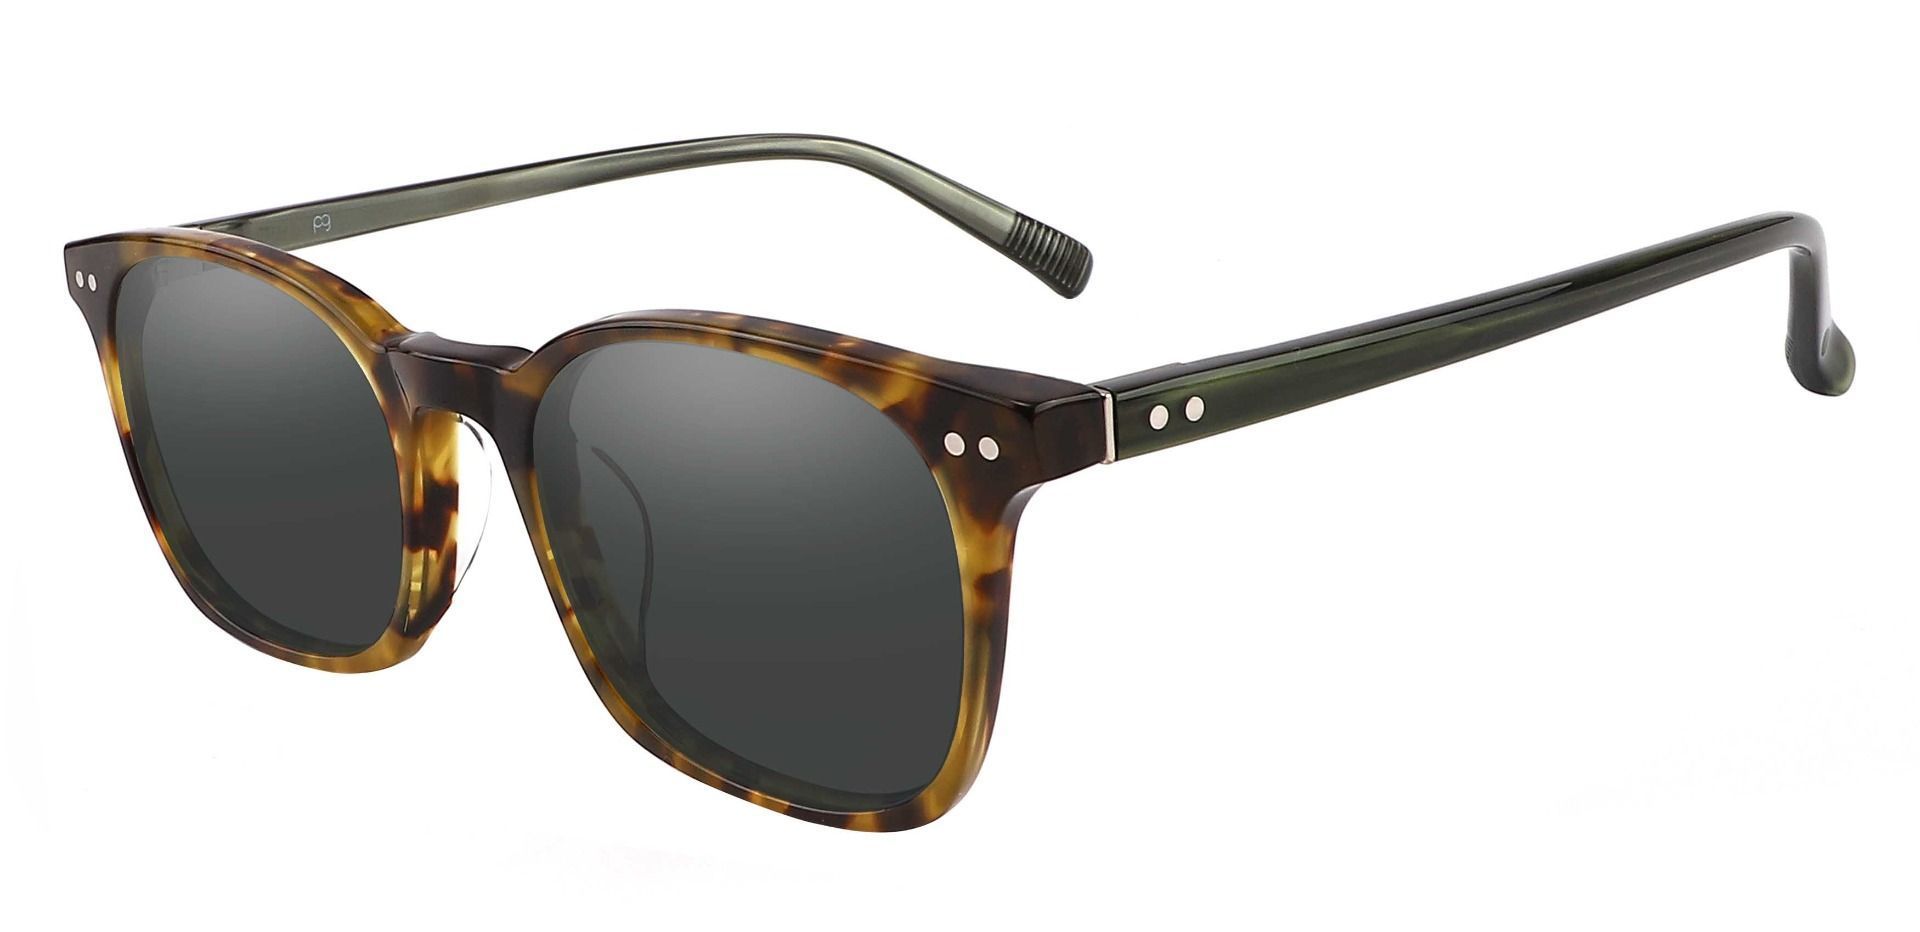 Alonzo Square Progressive Sunglasses - Tortoise Frame With Gray Lenses